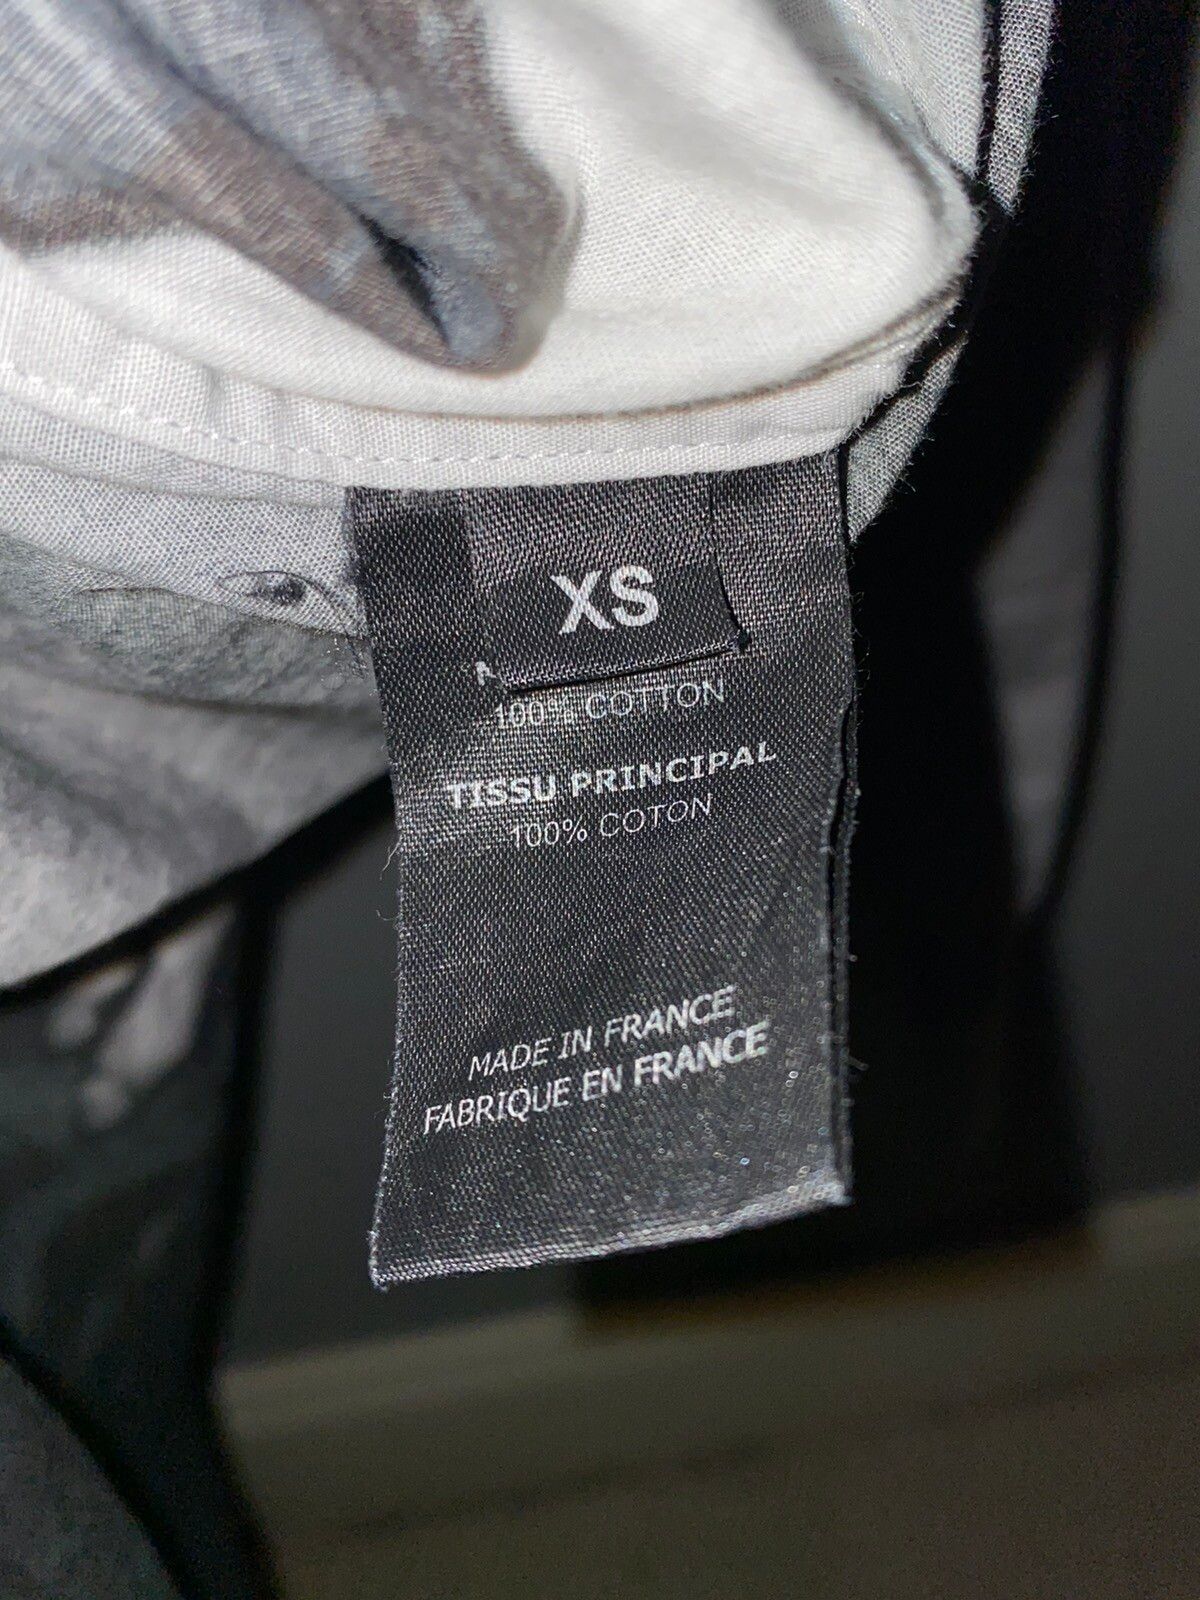 Vetements Vetements Marilyn Manson Printed Shirt - Black FW18 | Grailed